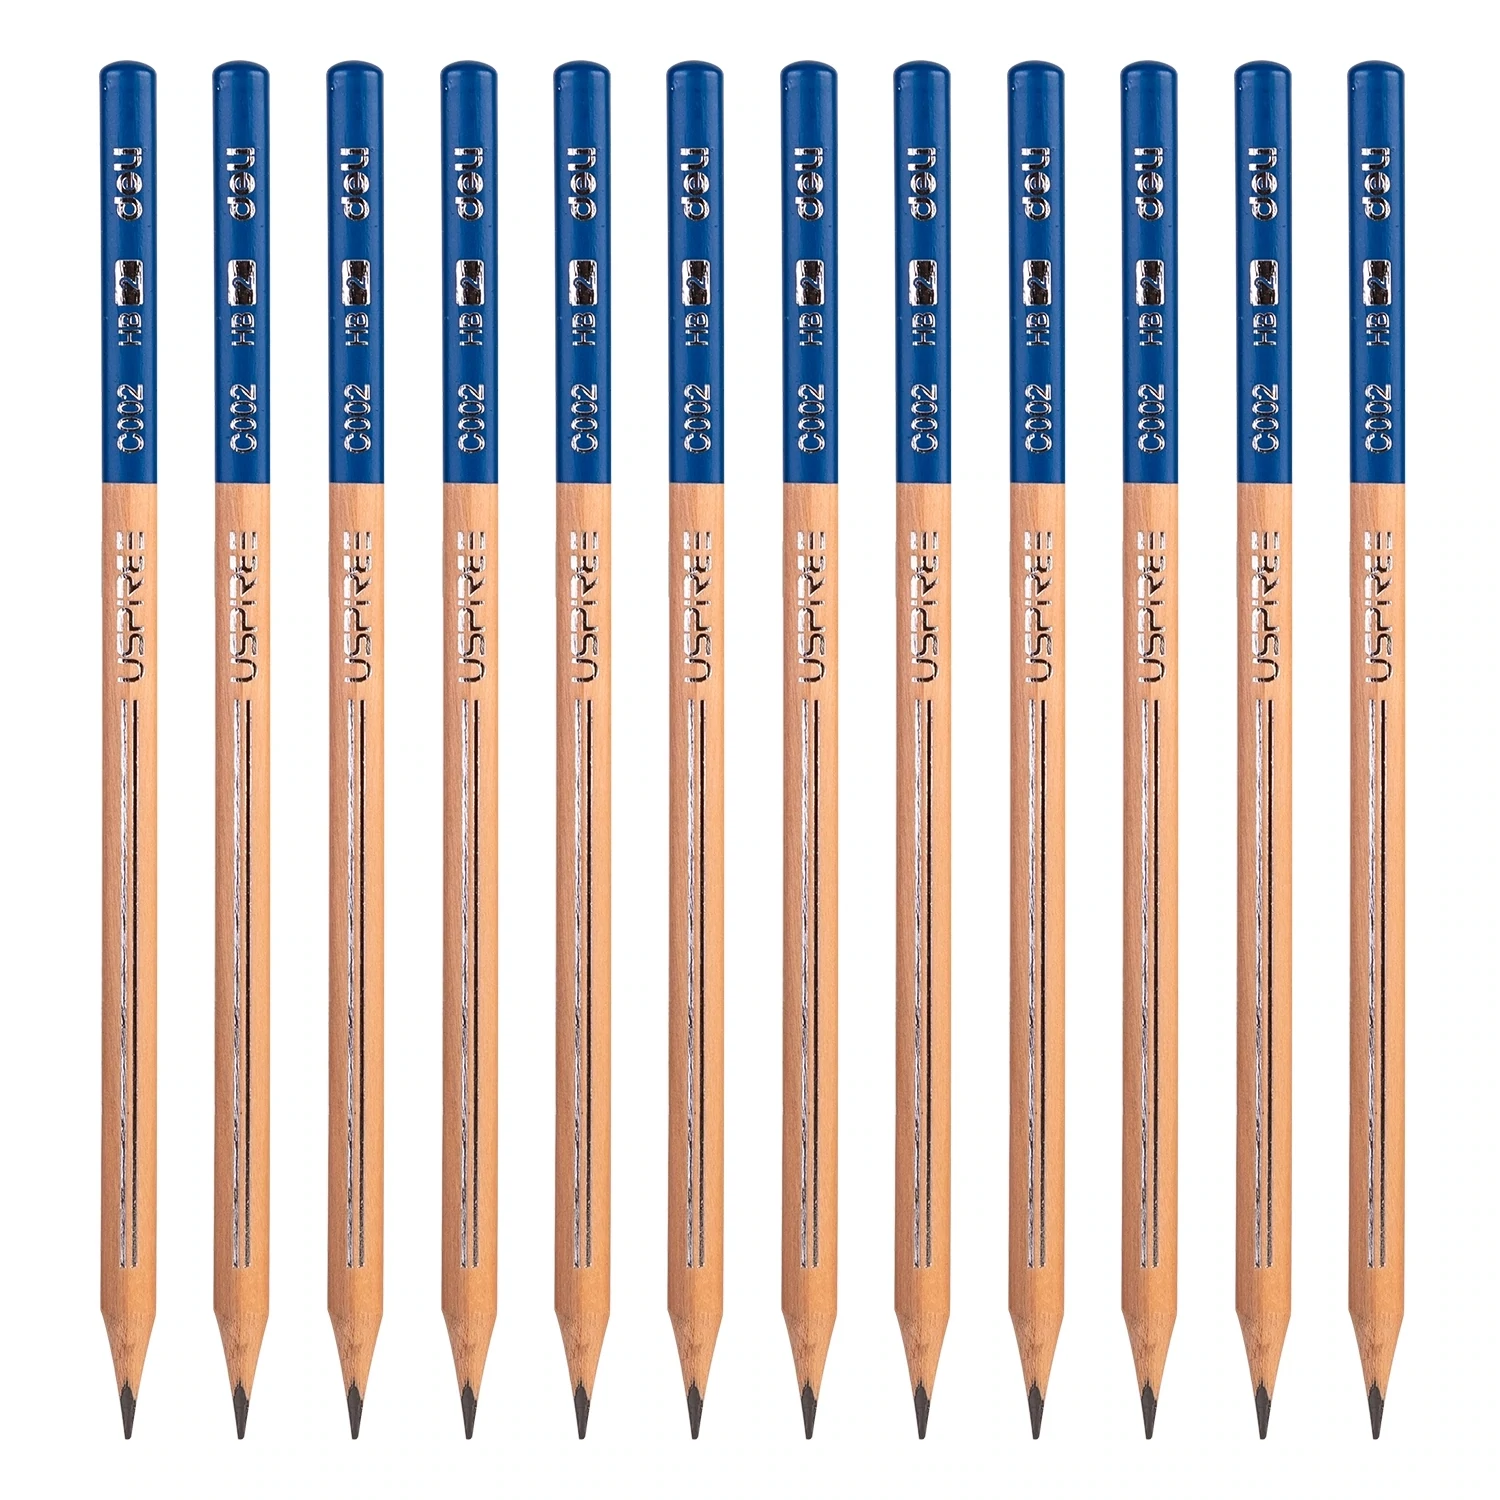 DELI C002-HB USPIRE Natural Wood-Grain HB Pencils (6-Dozen Wholesale)